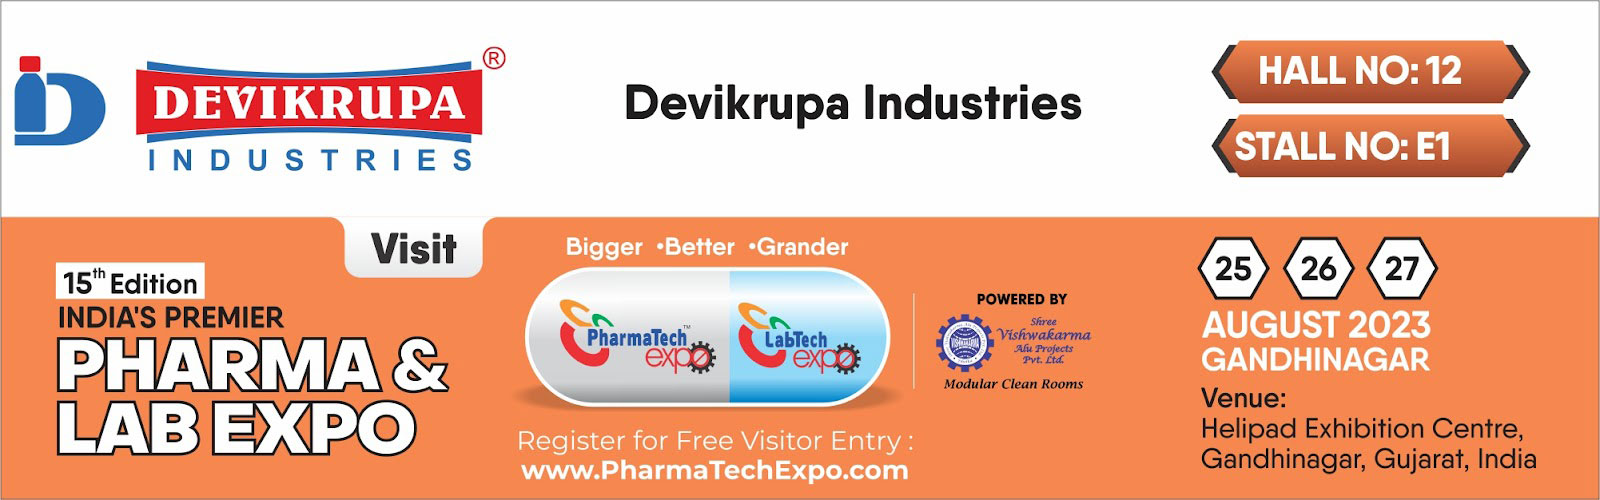 devikrupa-industries